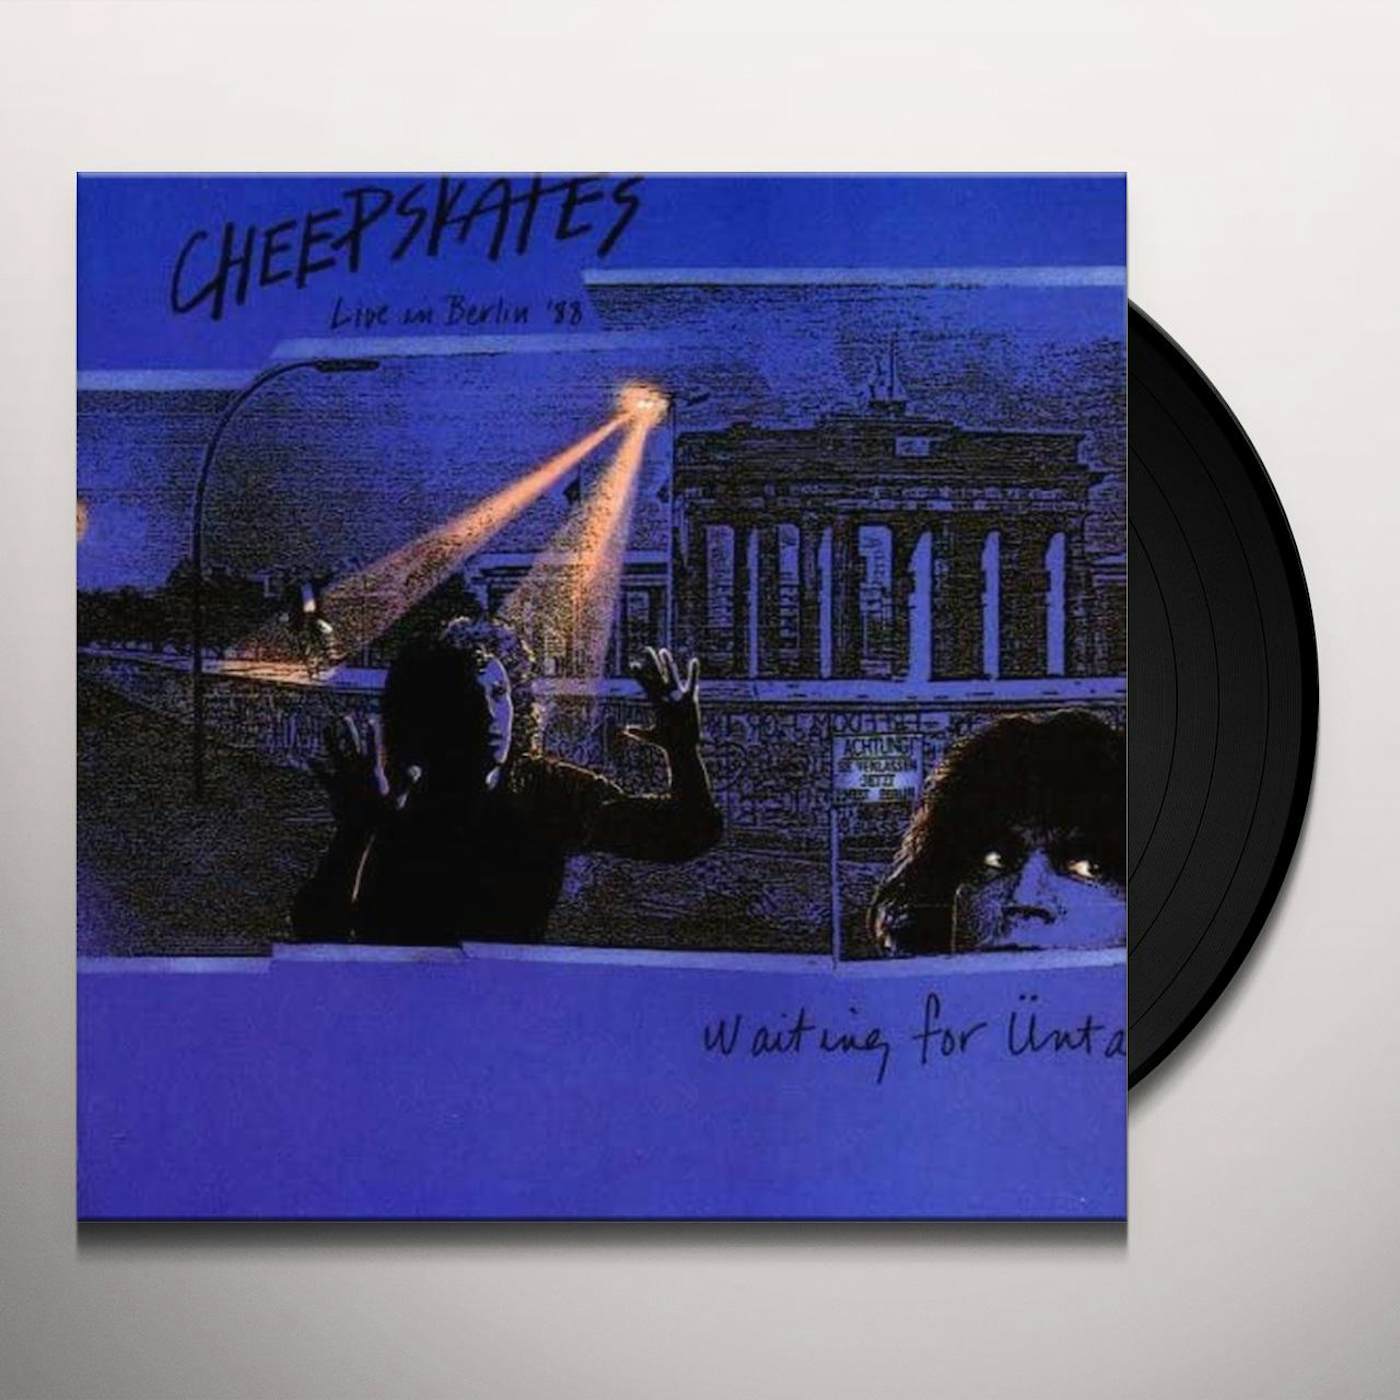 Cheepskates WAITING FOR UNTA LIVE Vinyl Record